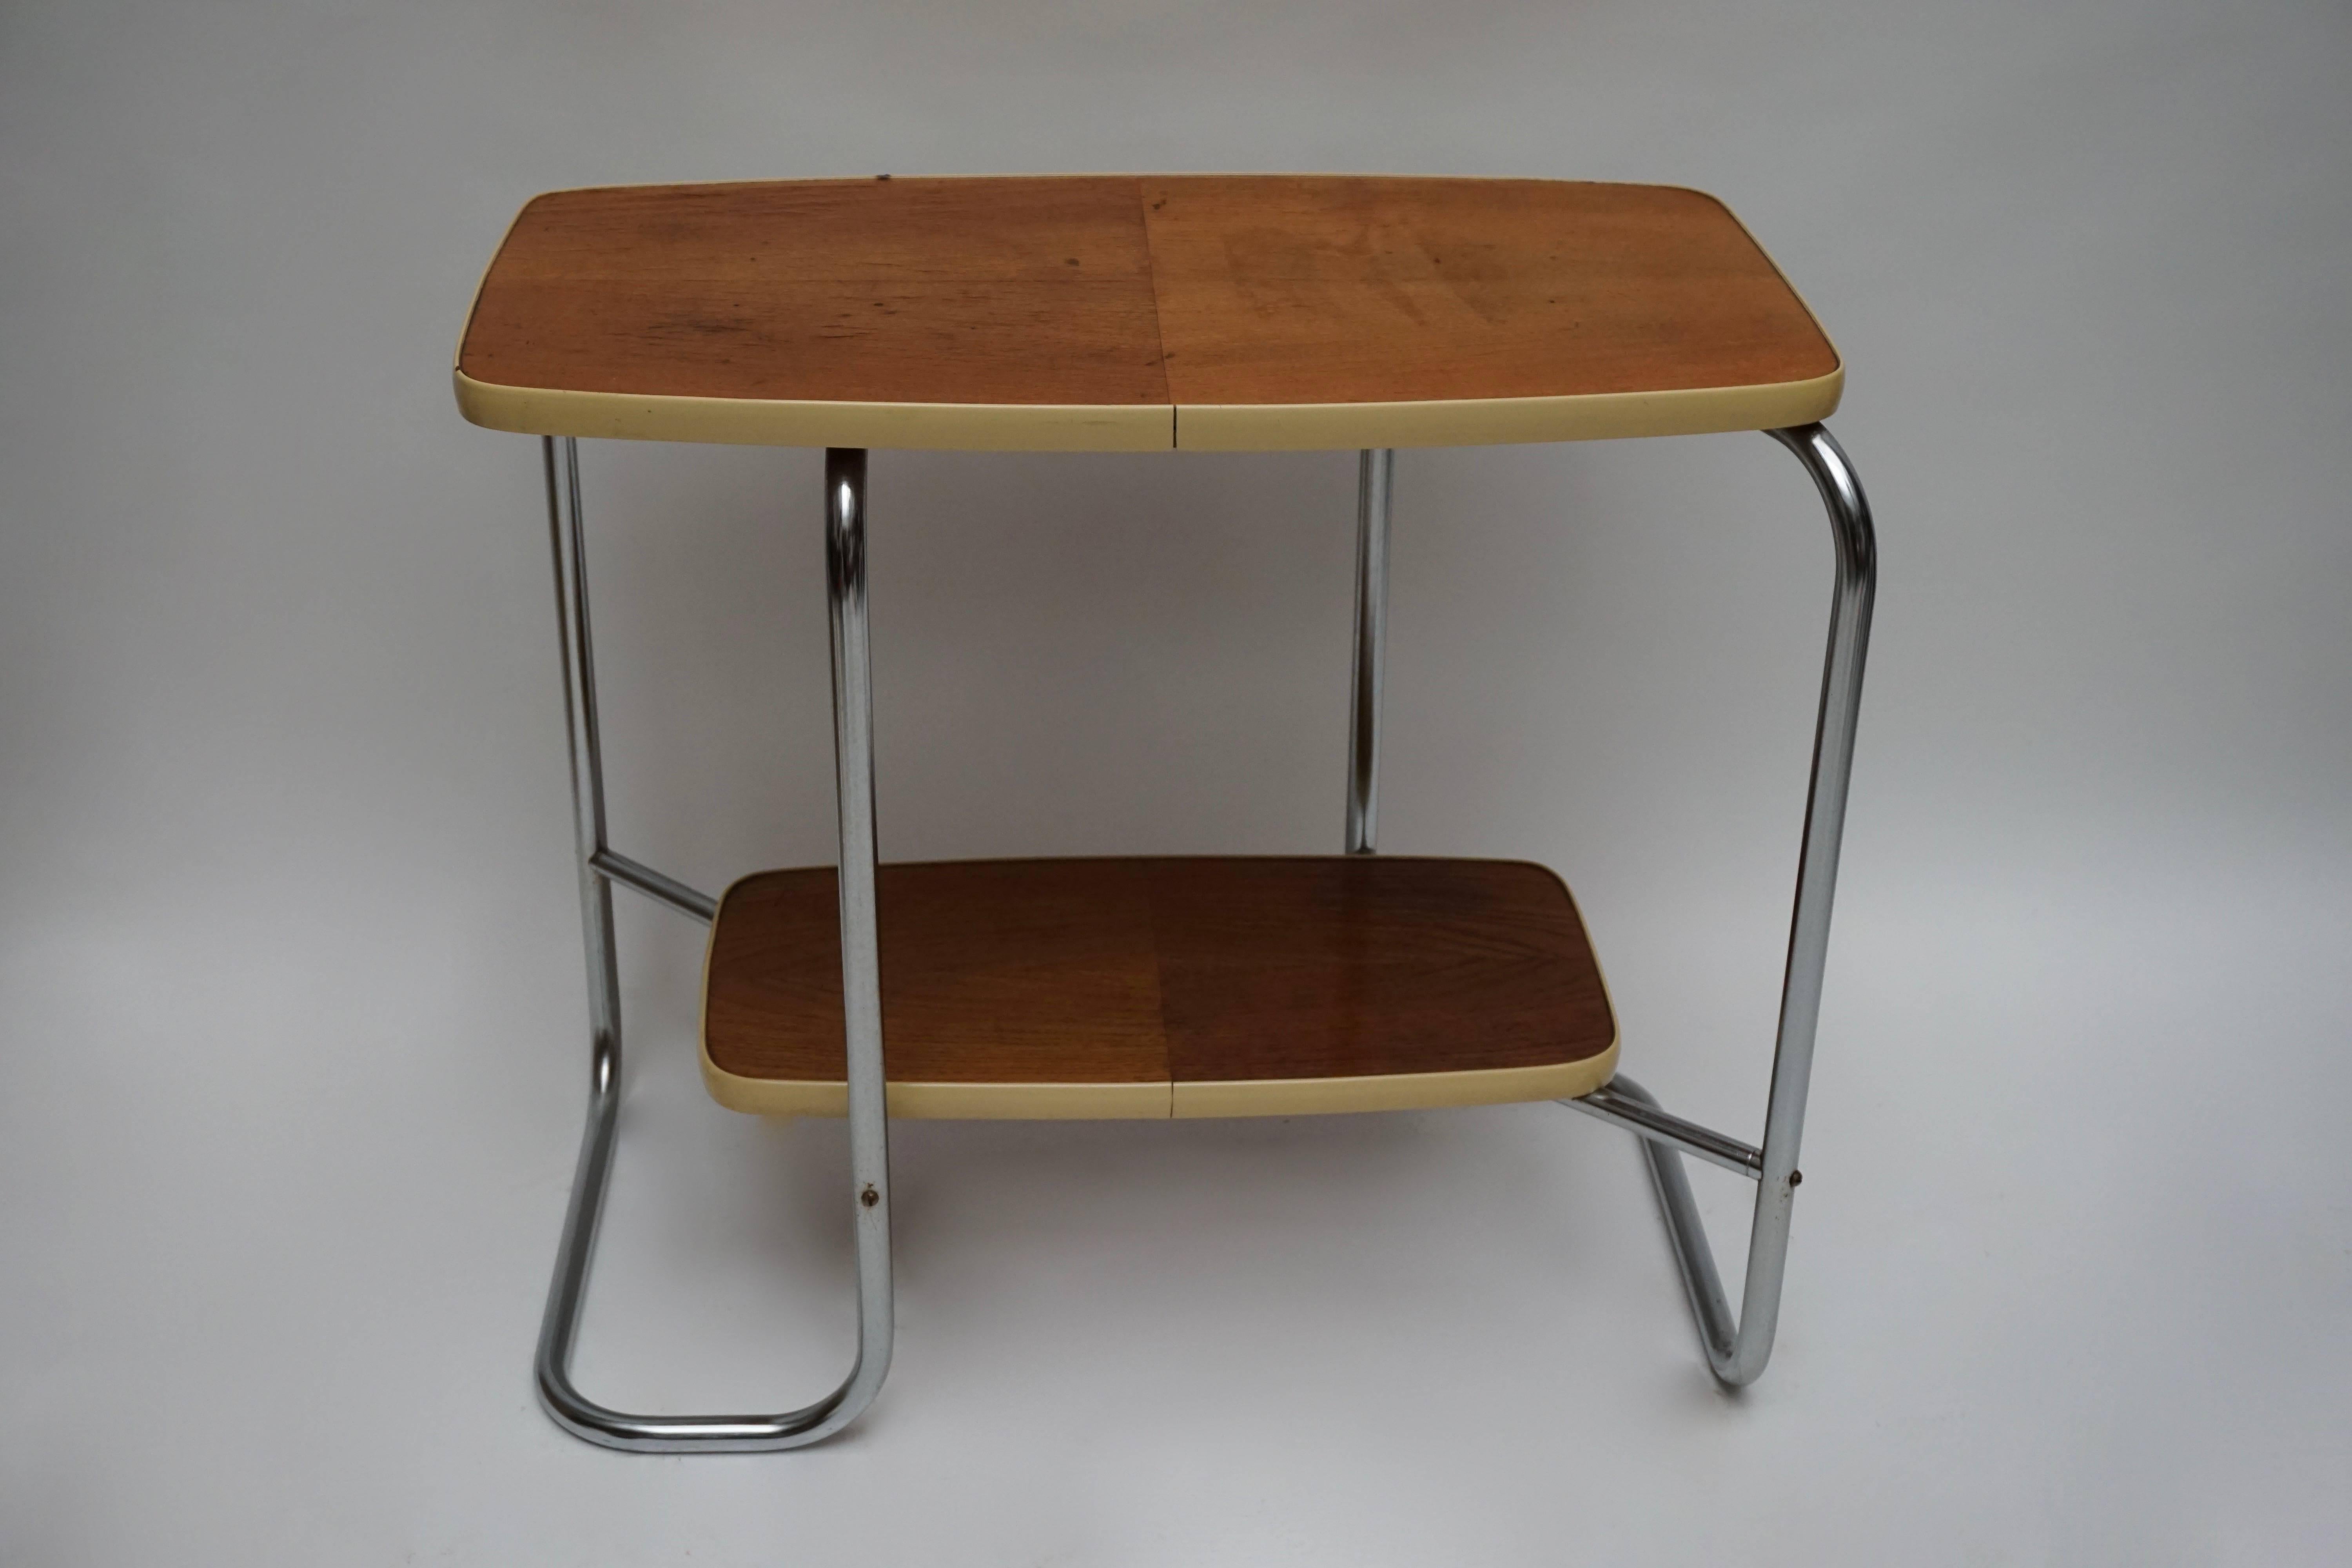 Belgian side table,1950s.
Measures: Height 60 cm.
Width 65 cm.
Depth 36 cm.